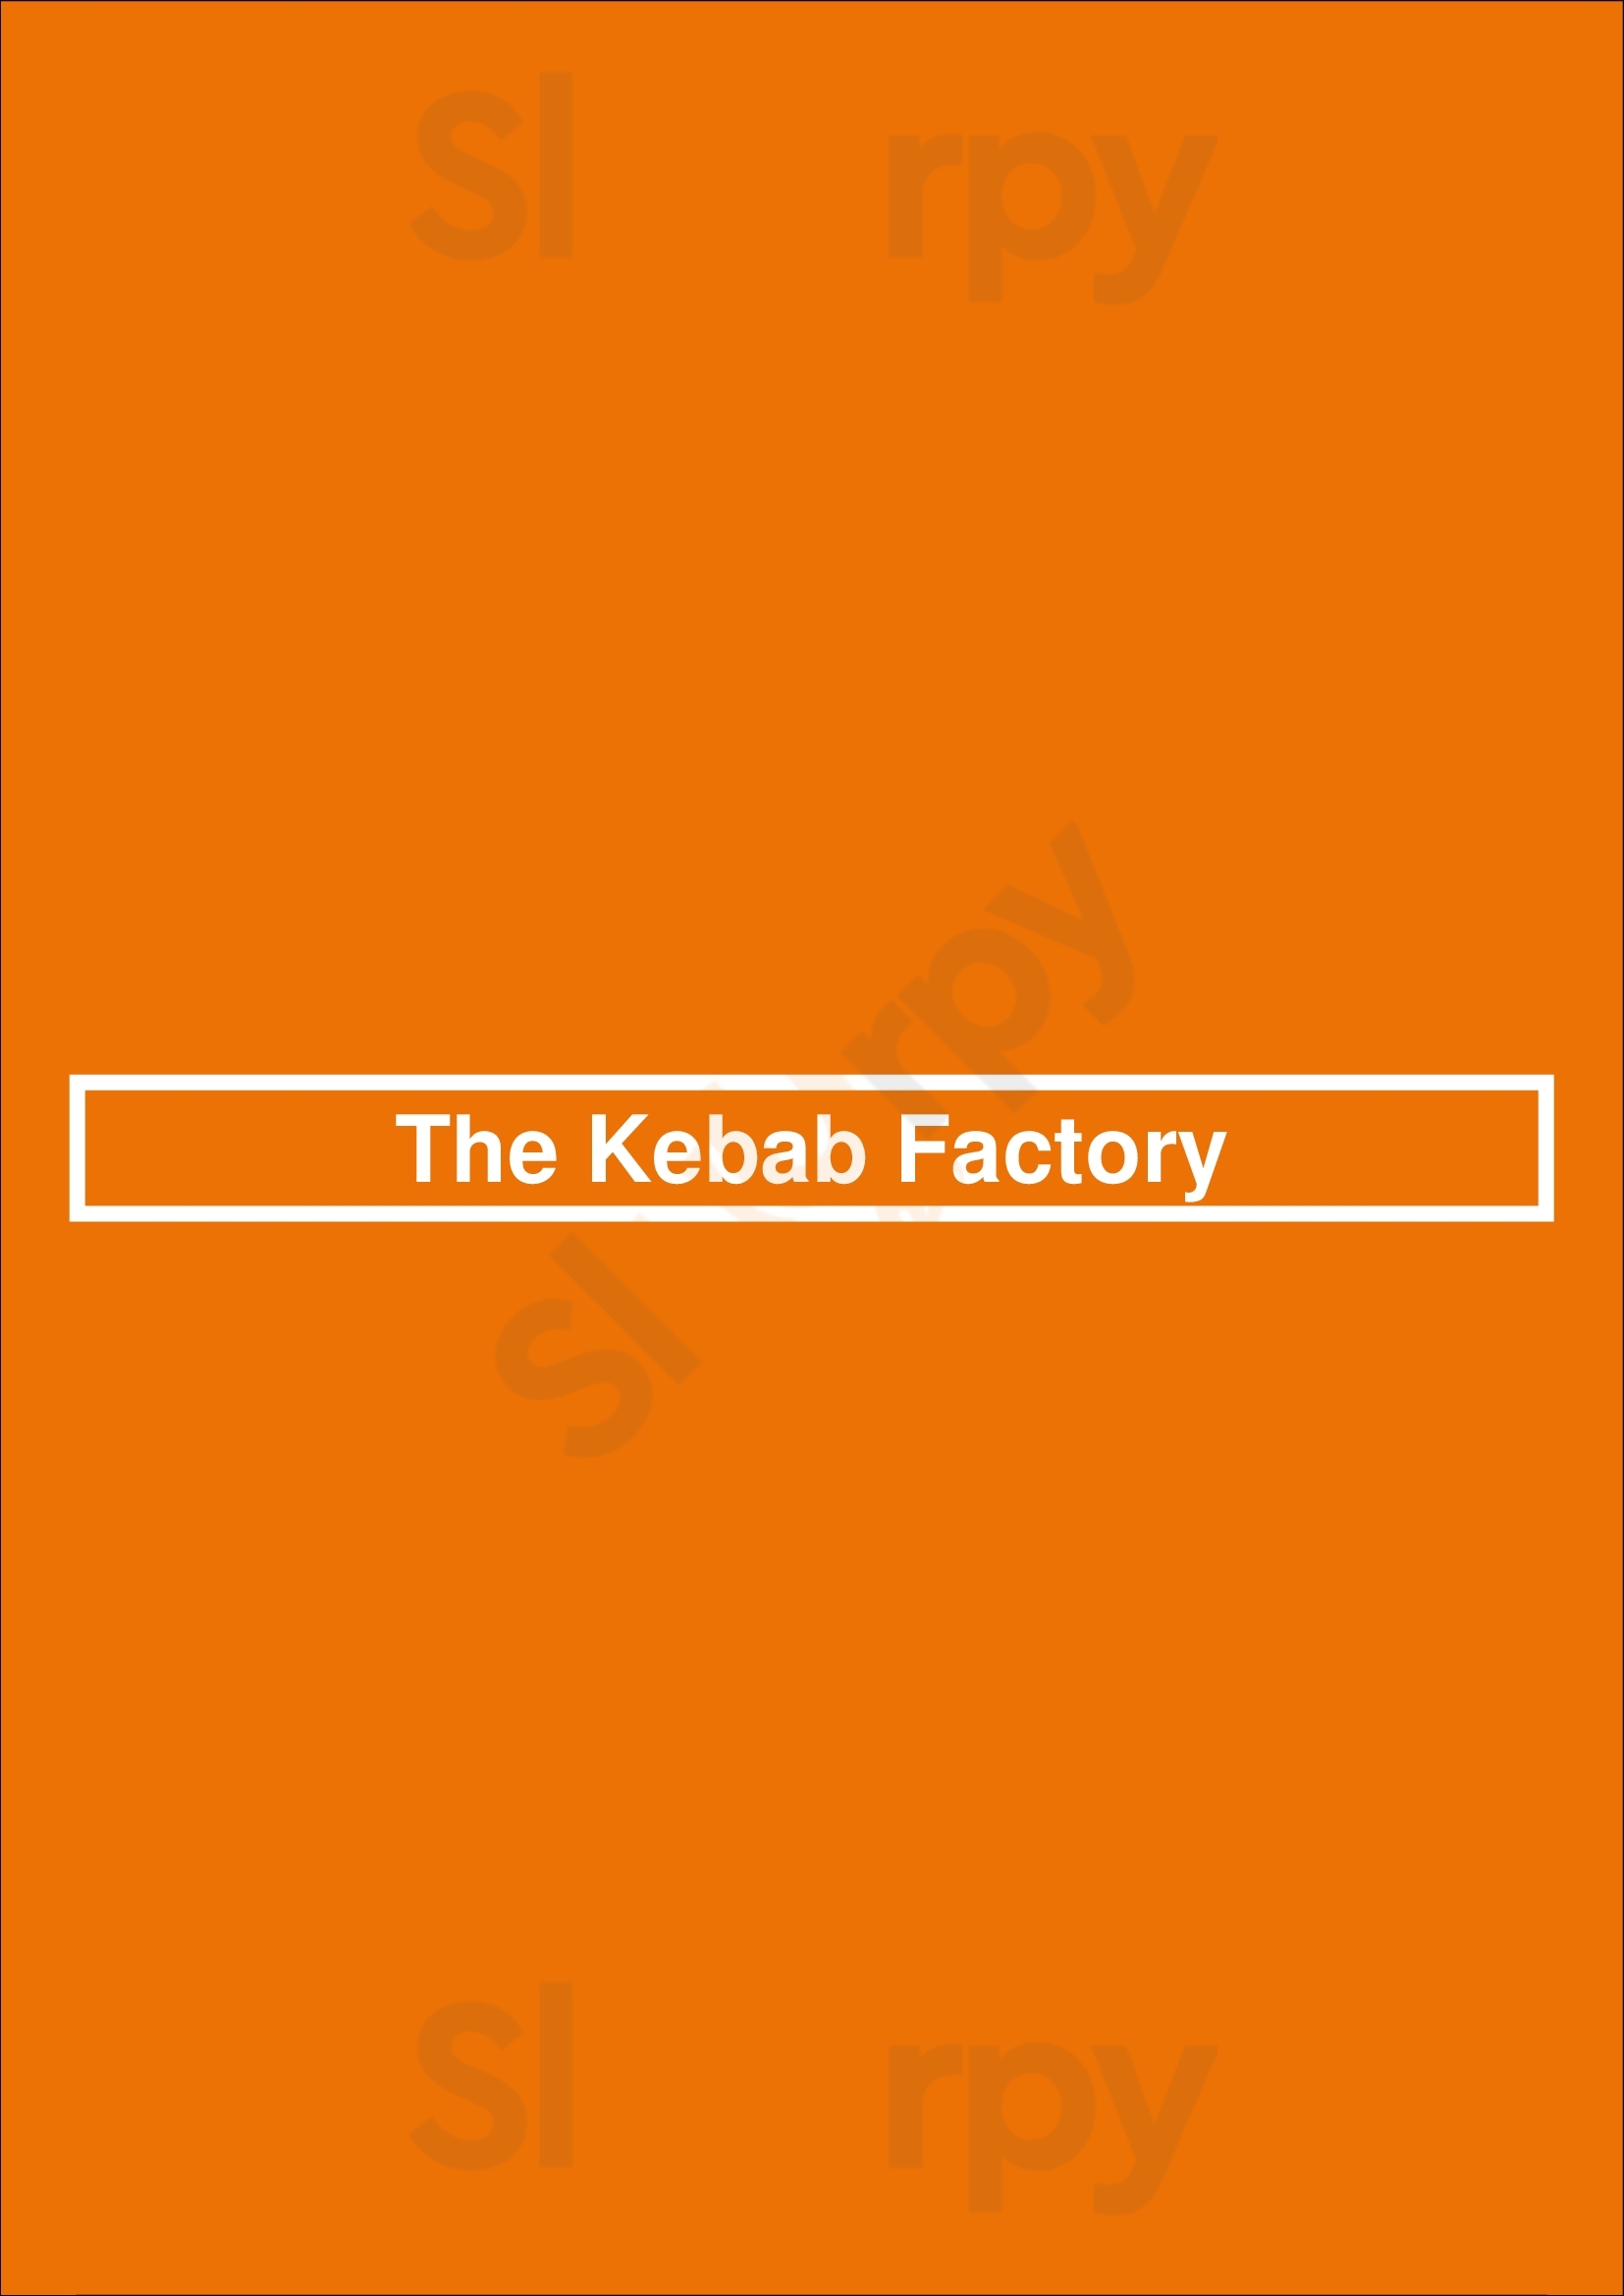 The Kebab Factory Somerville Menu - 1